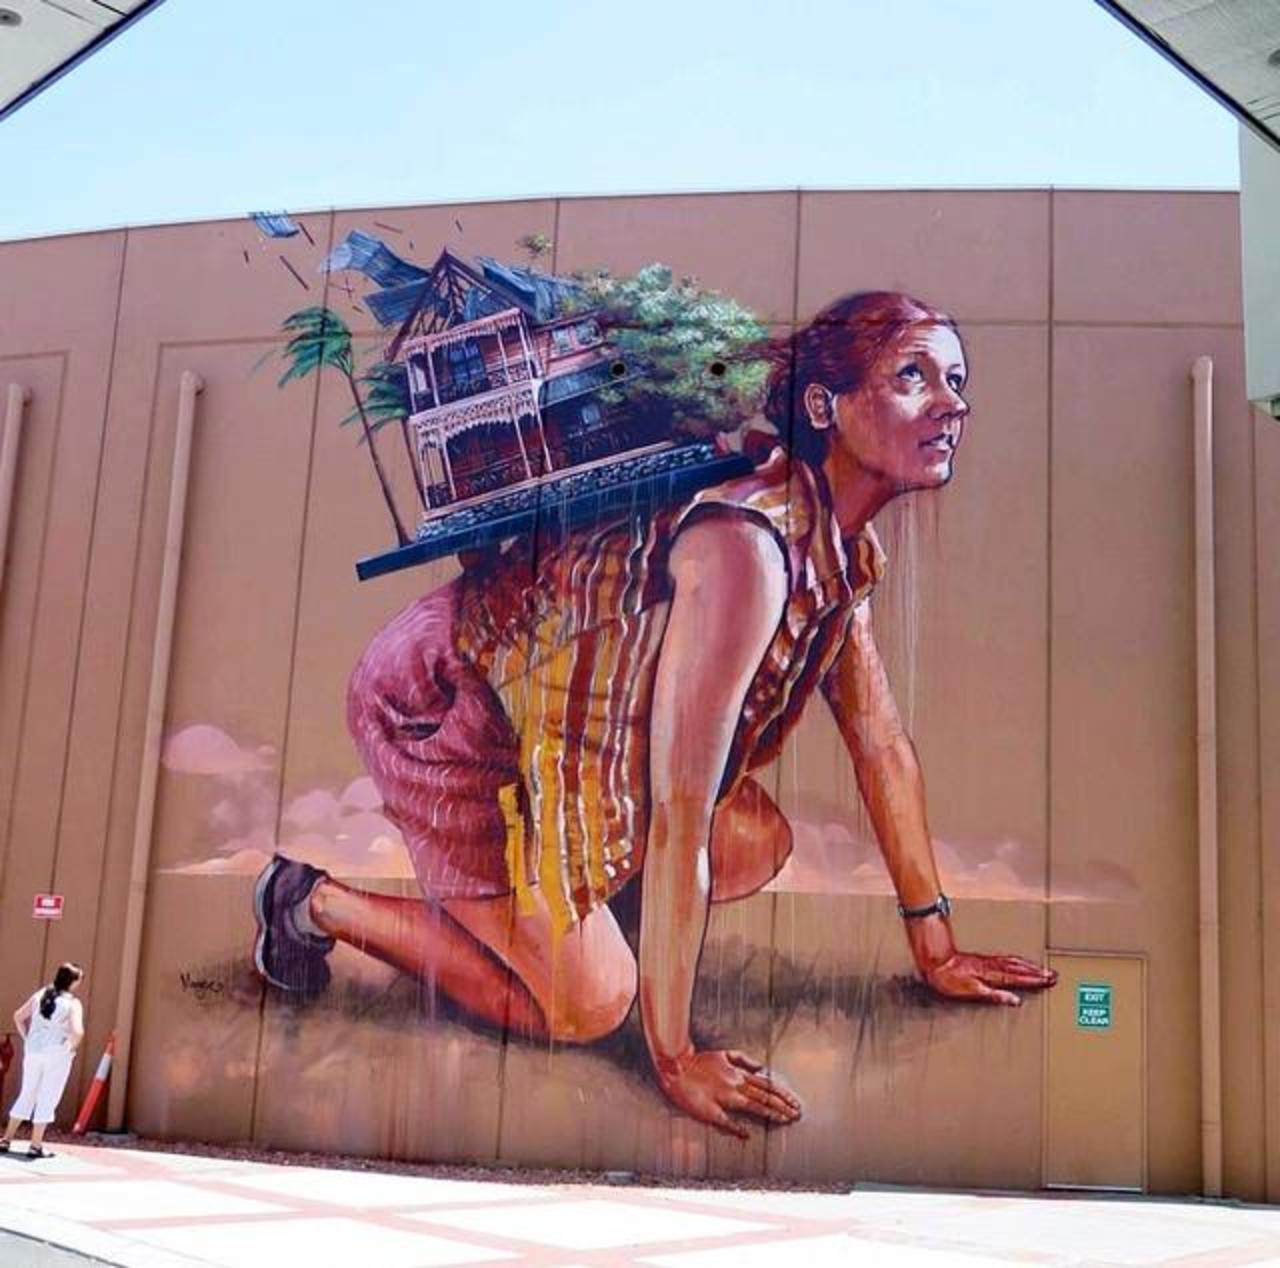 Latest Fintan Magee massive Street Art piece in Bunbury, Western Australia 

#art #graffiti #mural #streetart http://t.co/ACjI0NSMEa